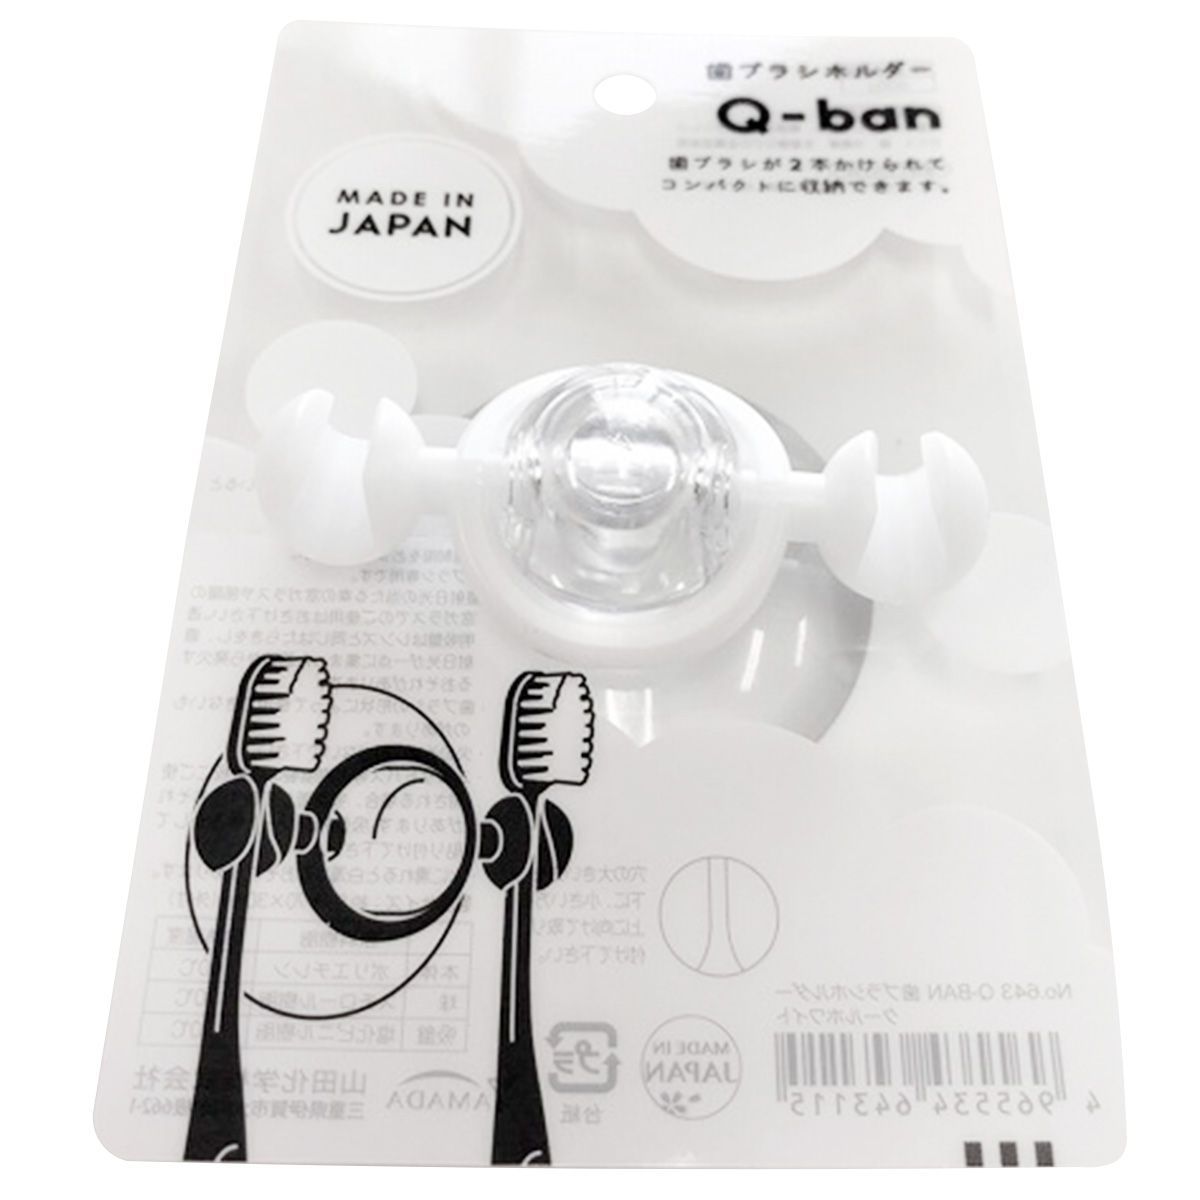 Q-BAN 歯ブラシホルダー クールホワイト 0847/333652